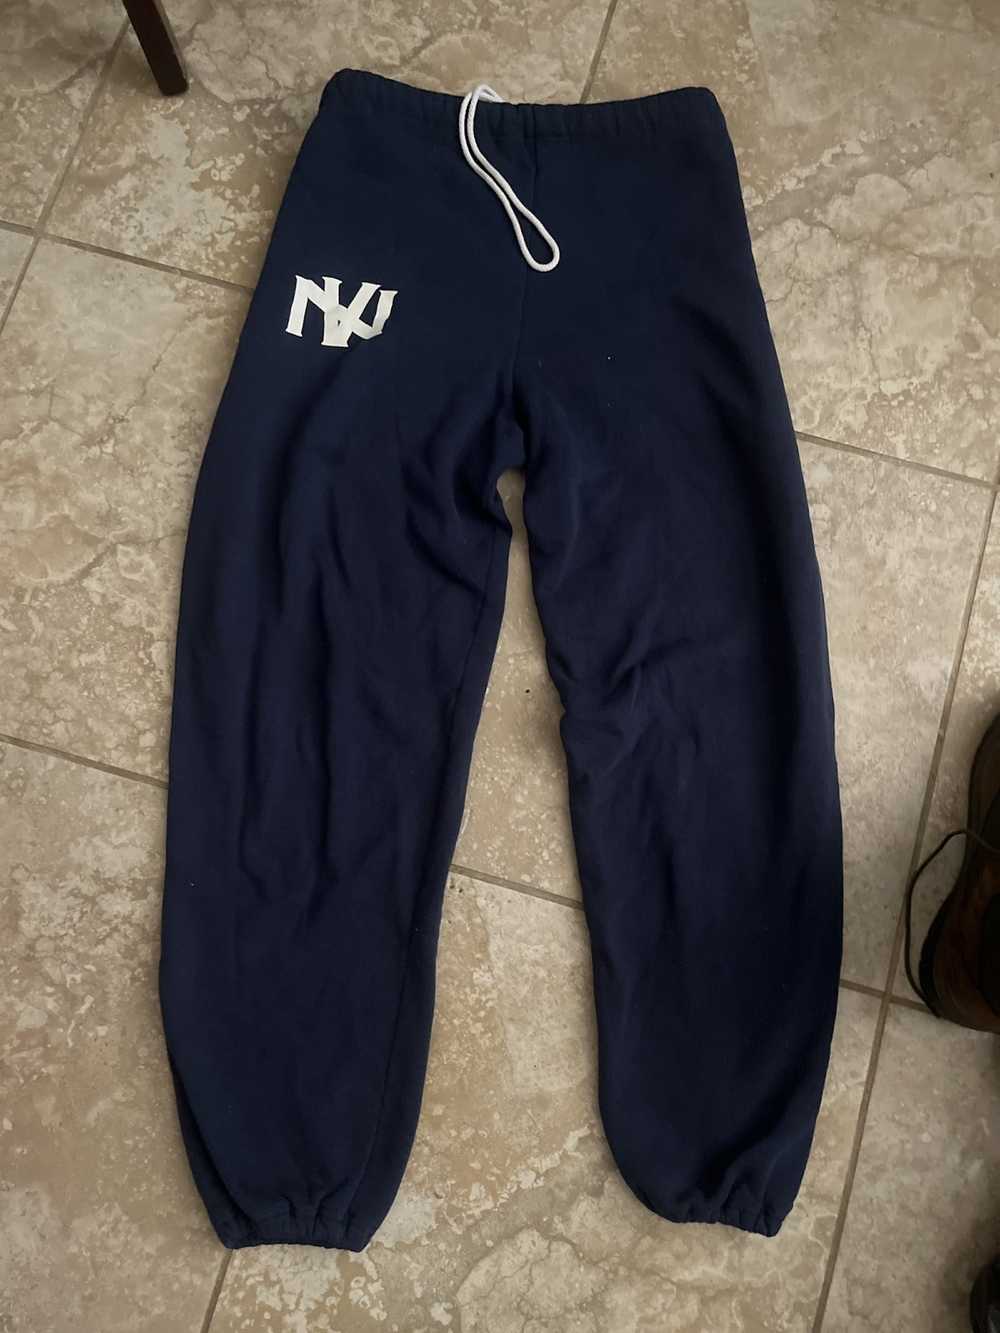 Vintage Navy Blue Sweatpants - image 1